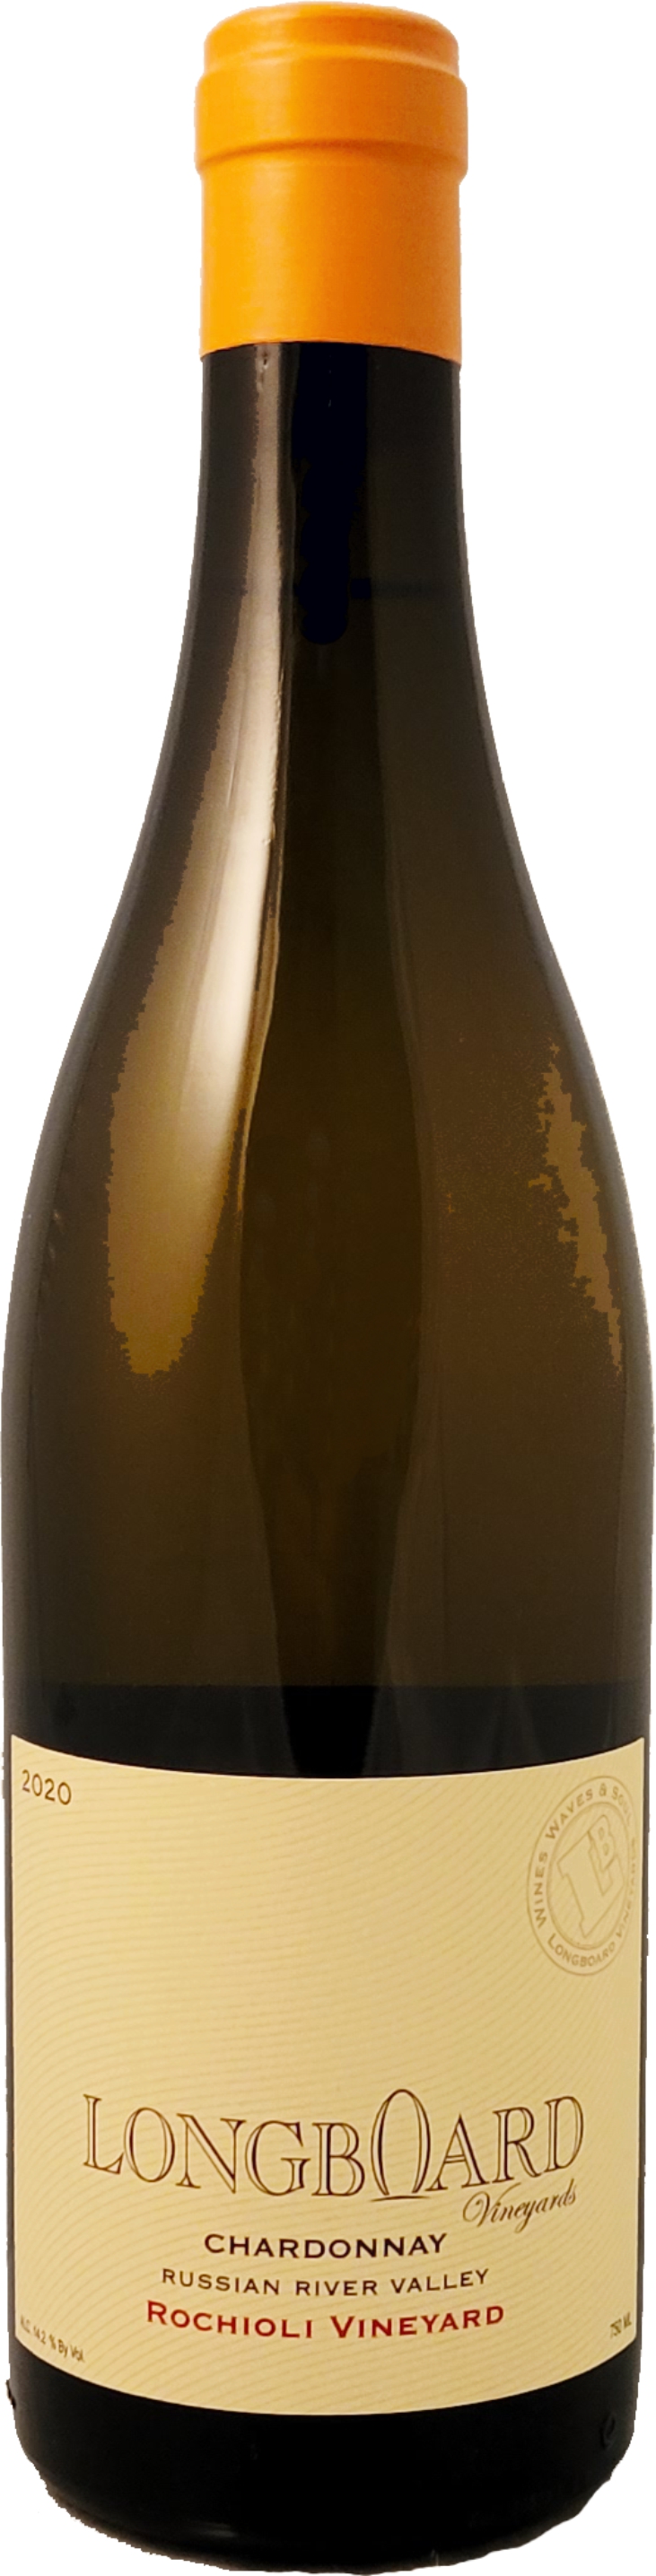 2020 Chardonnay - Rochioli Vineyard